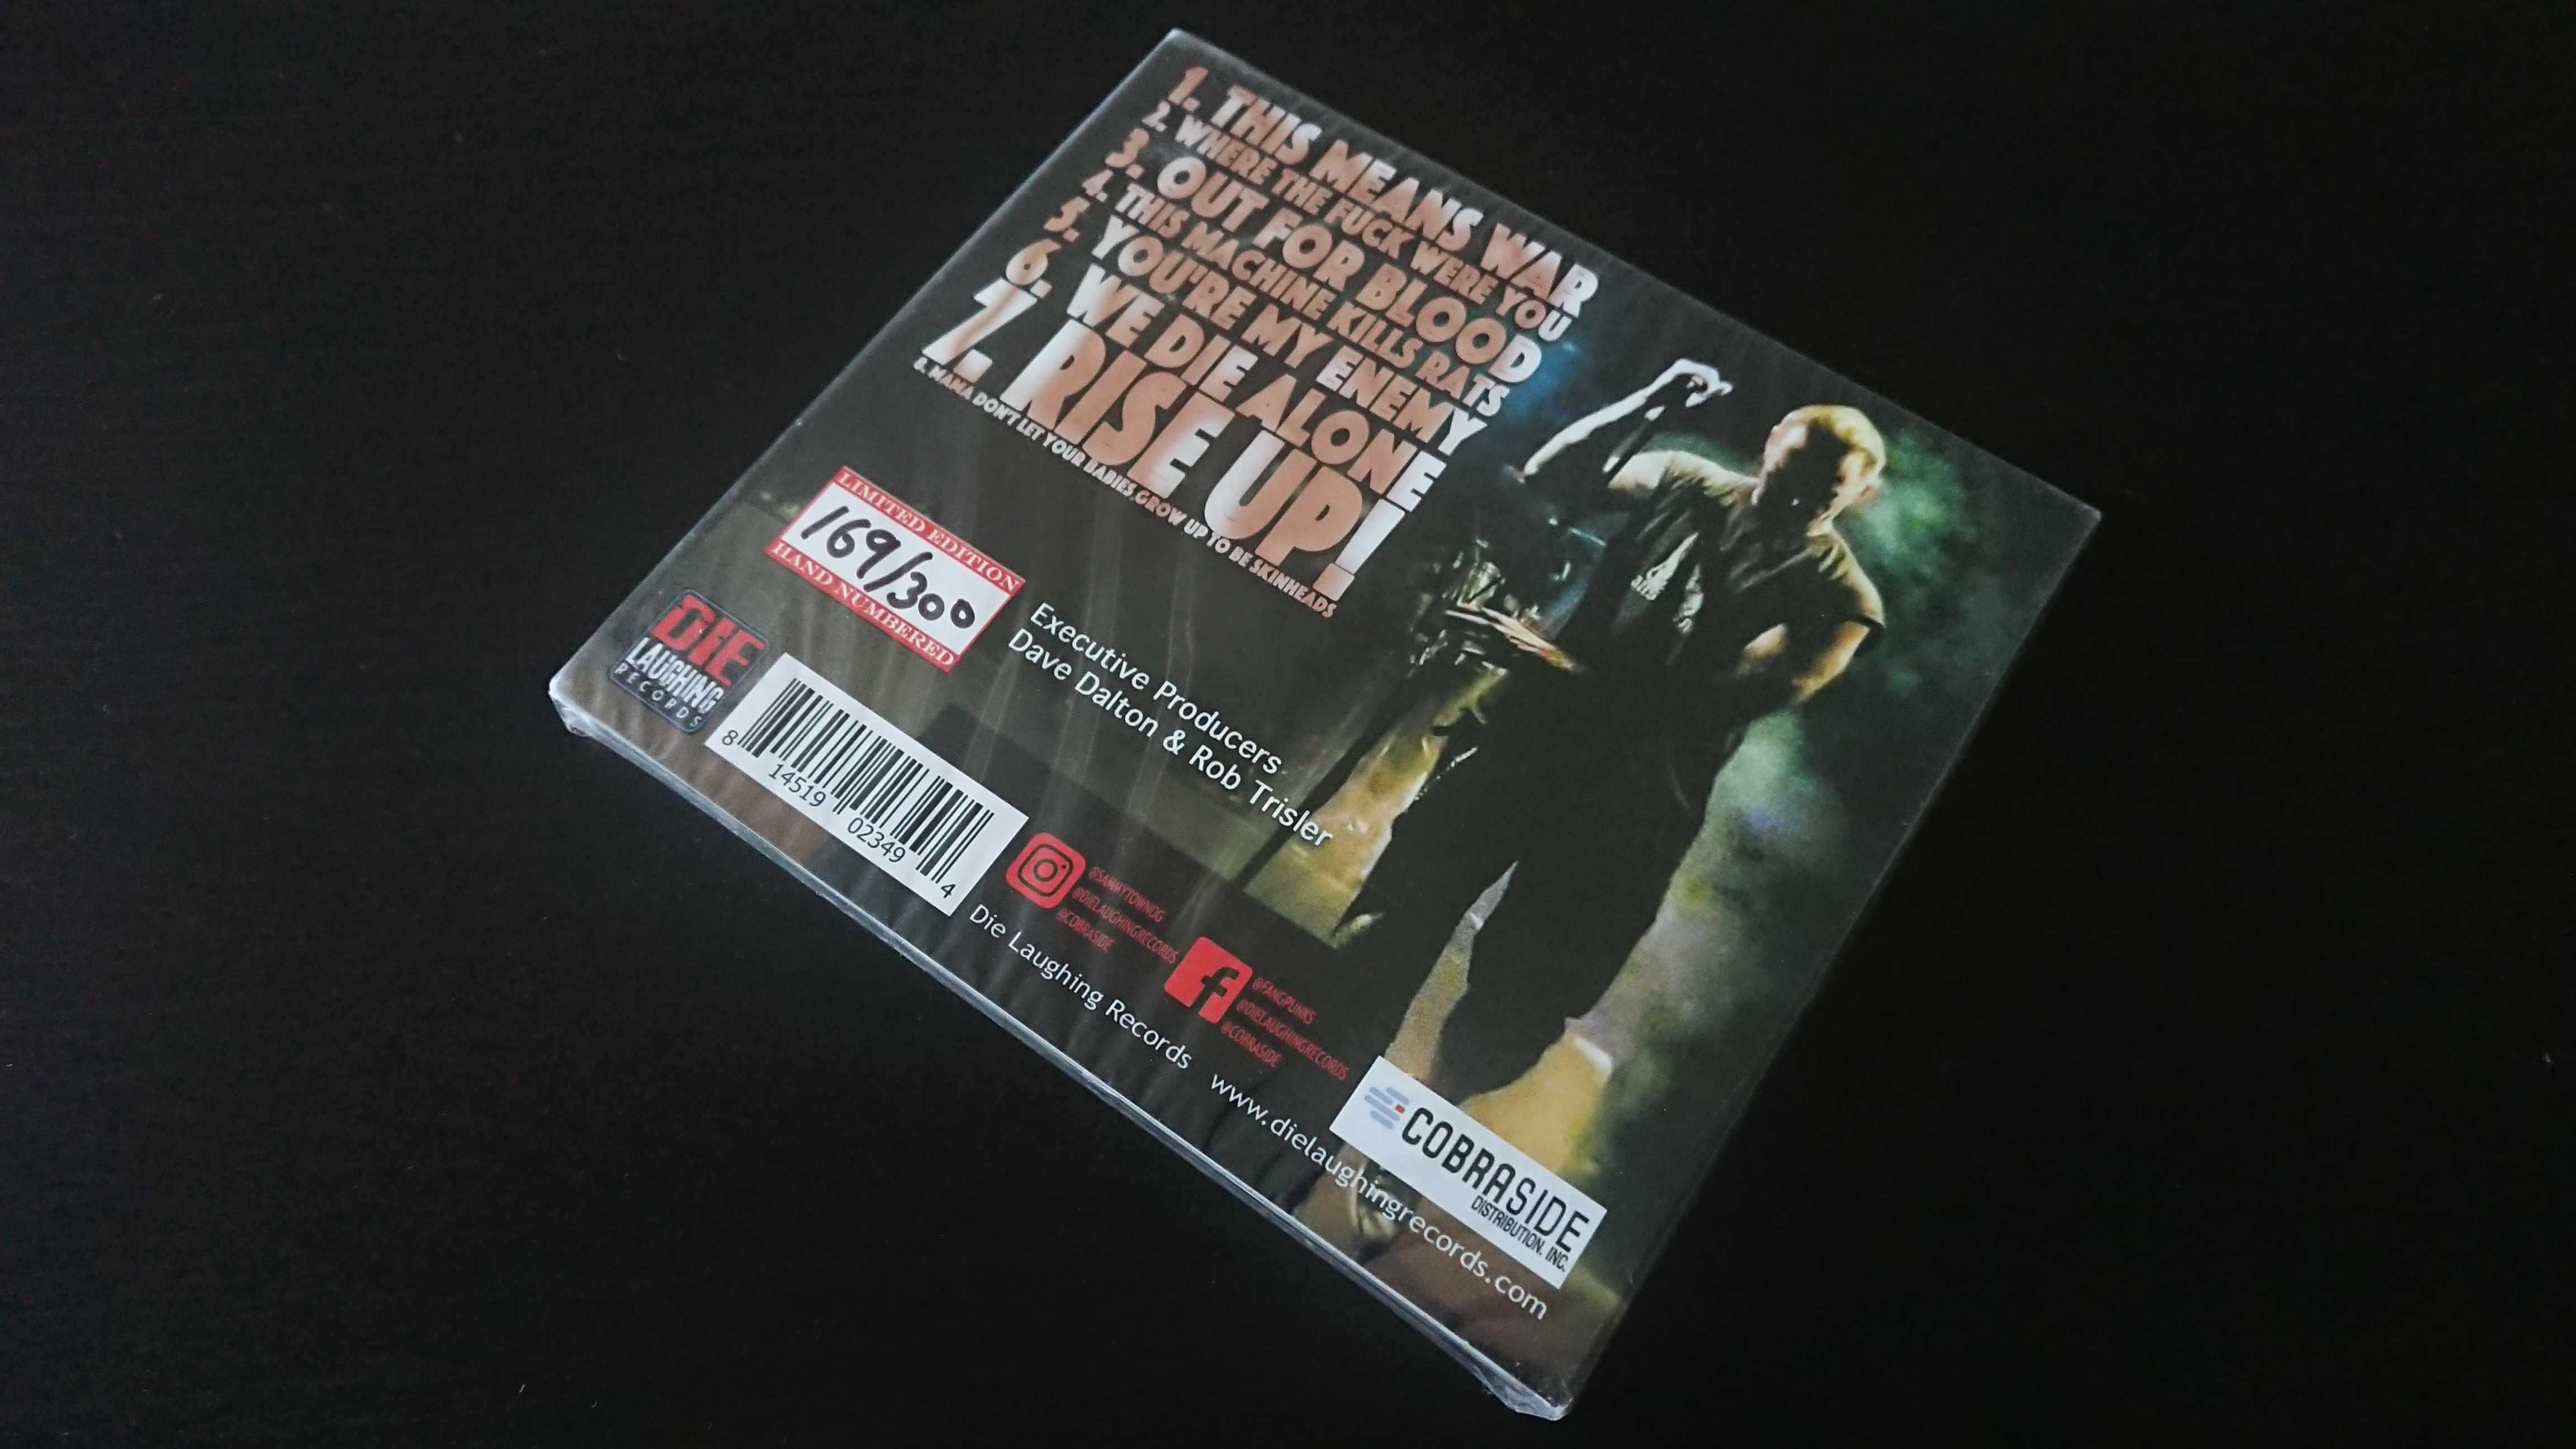 FANG Rise Up! CD *NOWA* 169/300 Limited Edition Folia Punk Hardcore